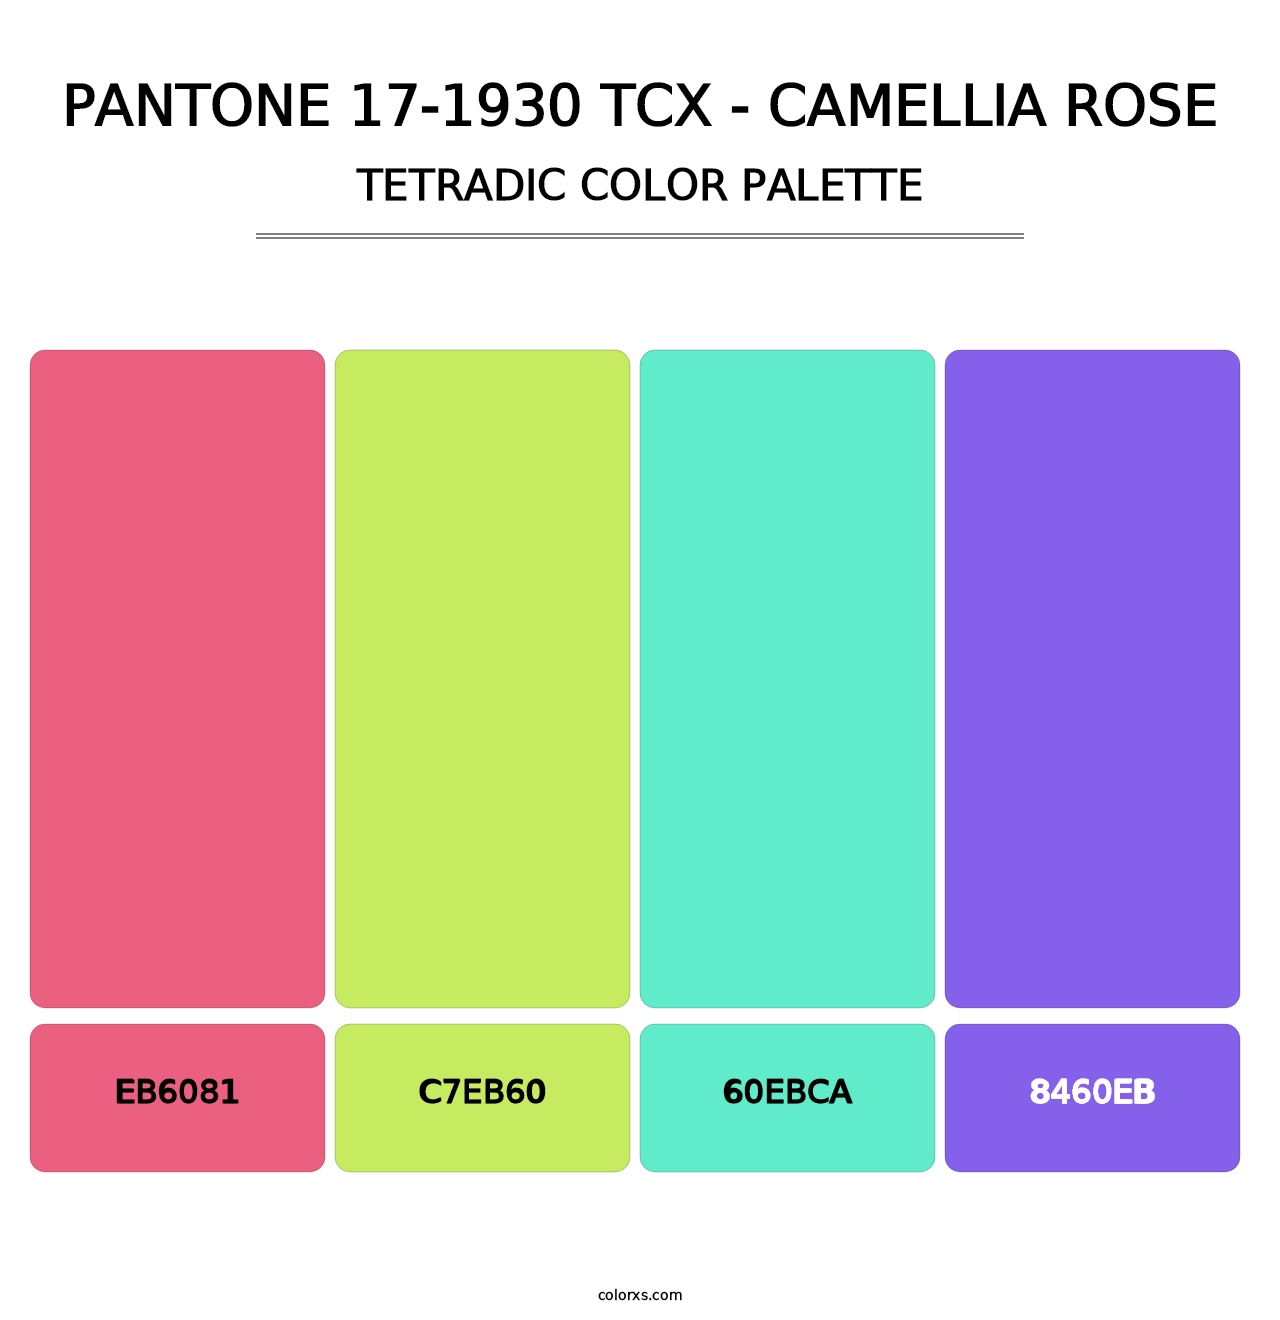 PANTONE 17-1930 TCX - Camellia Rose - Tetradic Color Palette